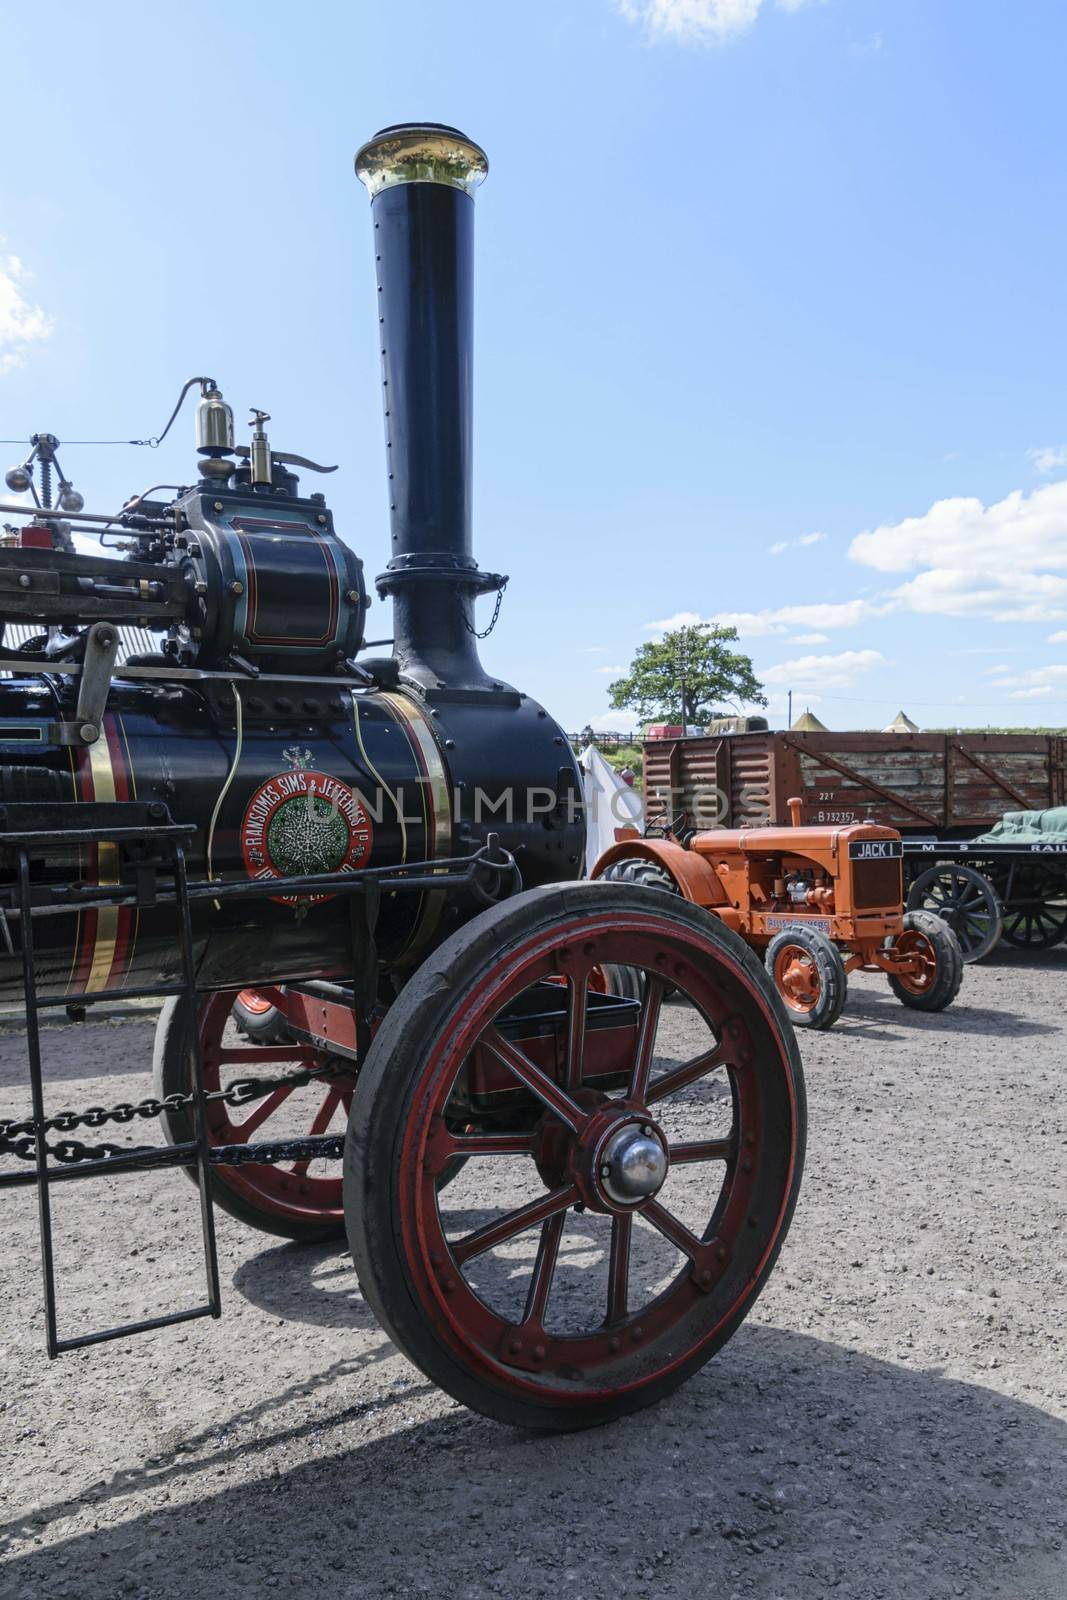 UK, Rothley - June 2018: Steam engine at vintage show 